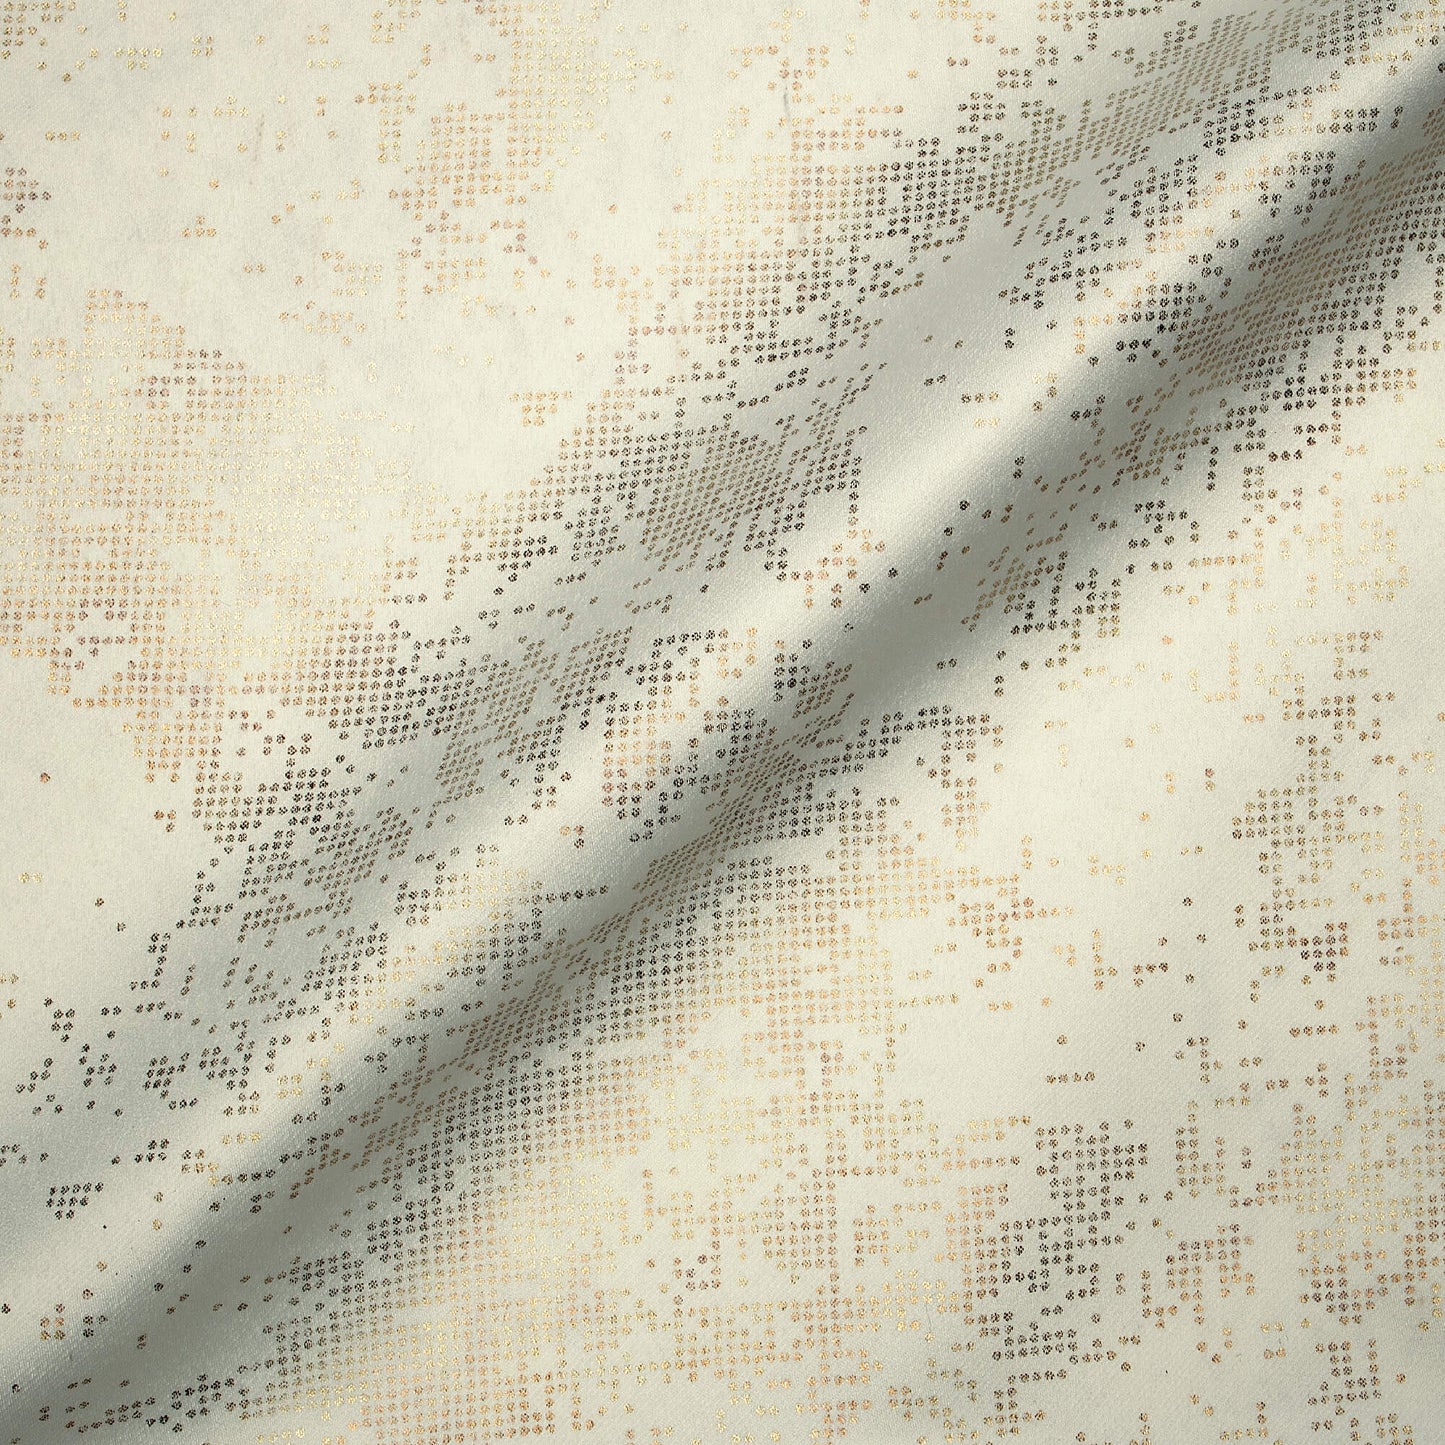 White Golden Dots Geometric Pattern Premium Curtain Fabric (Width 54 Inches)